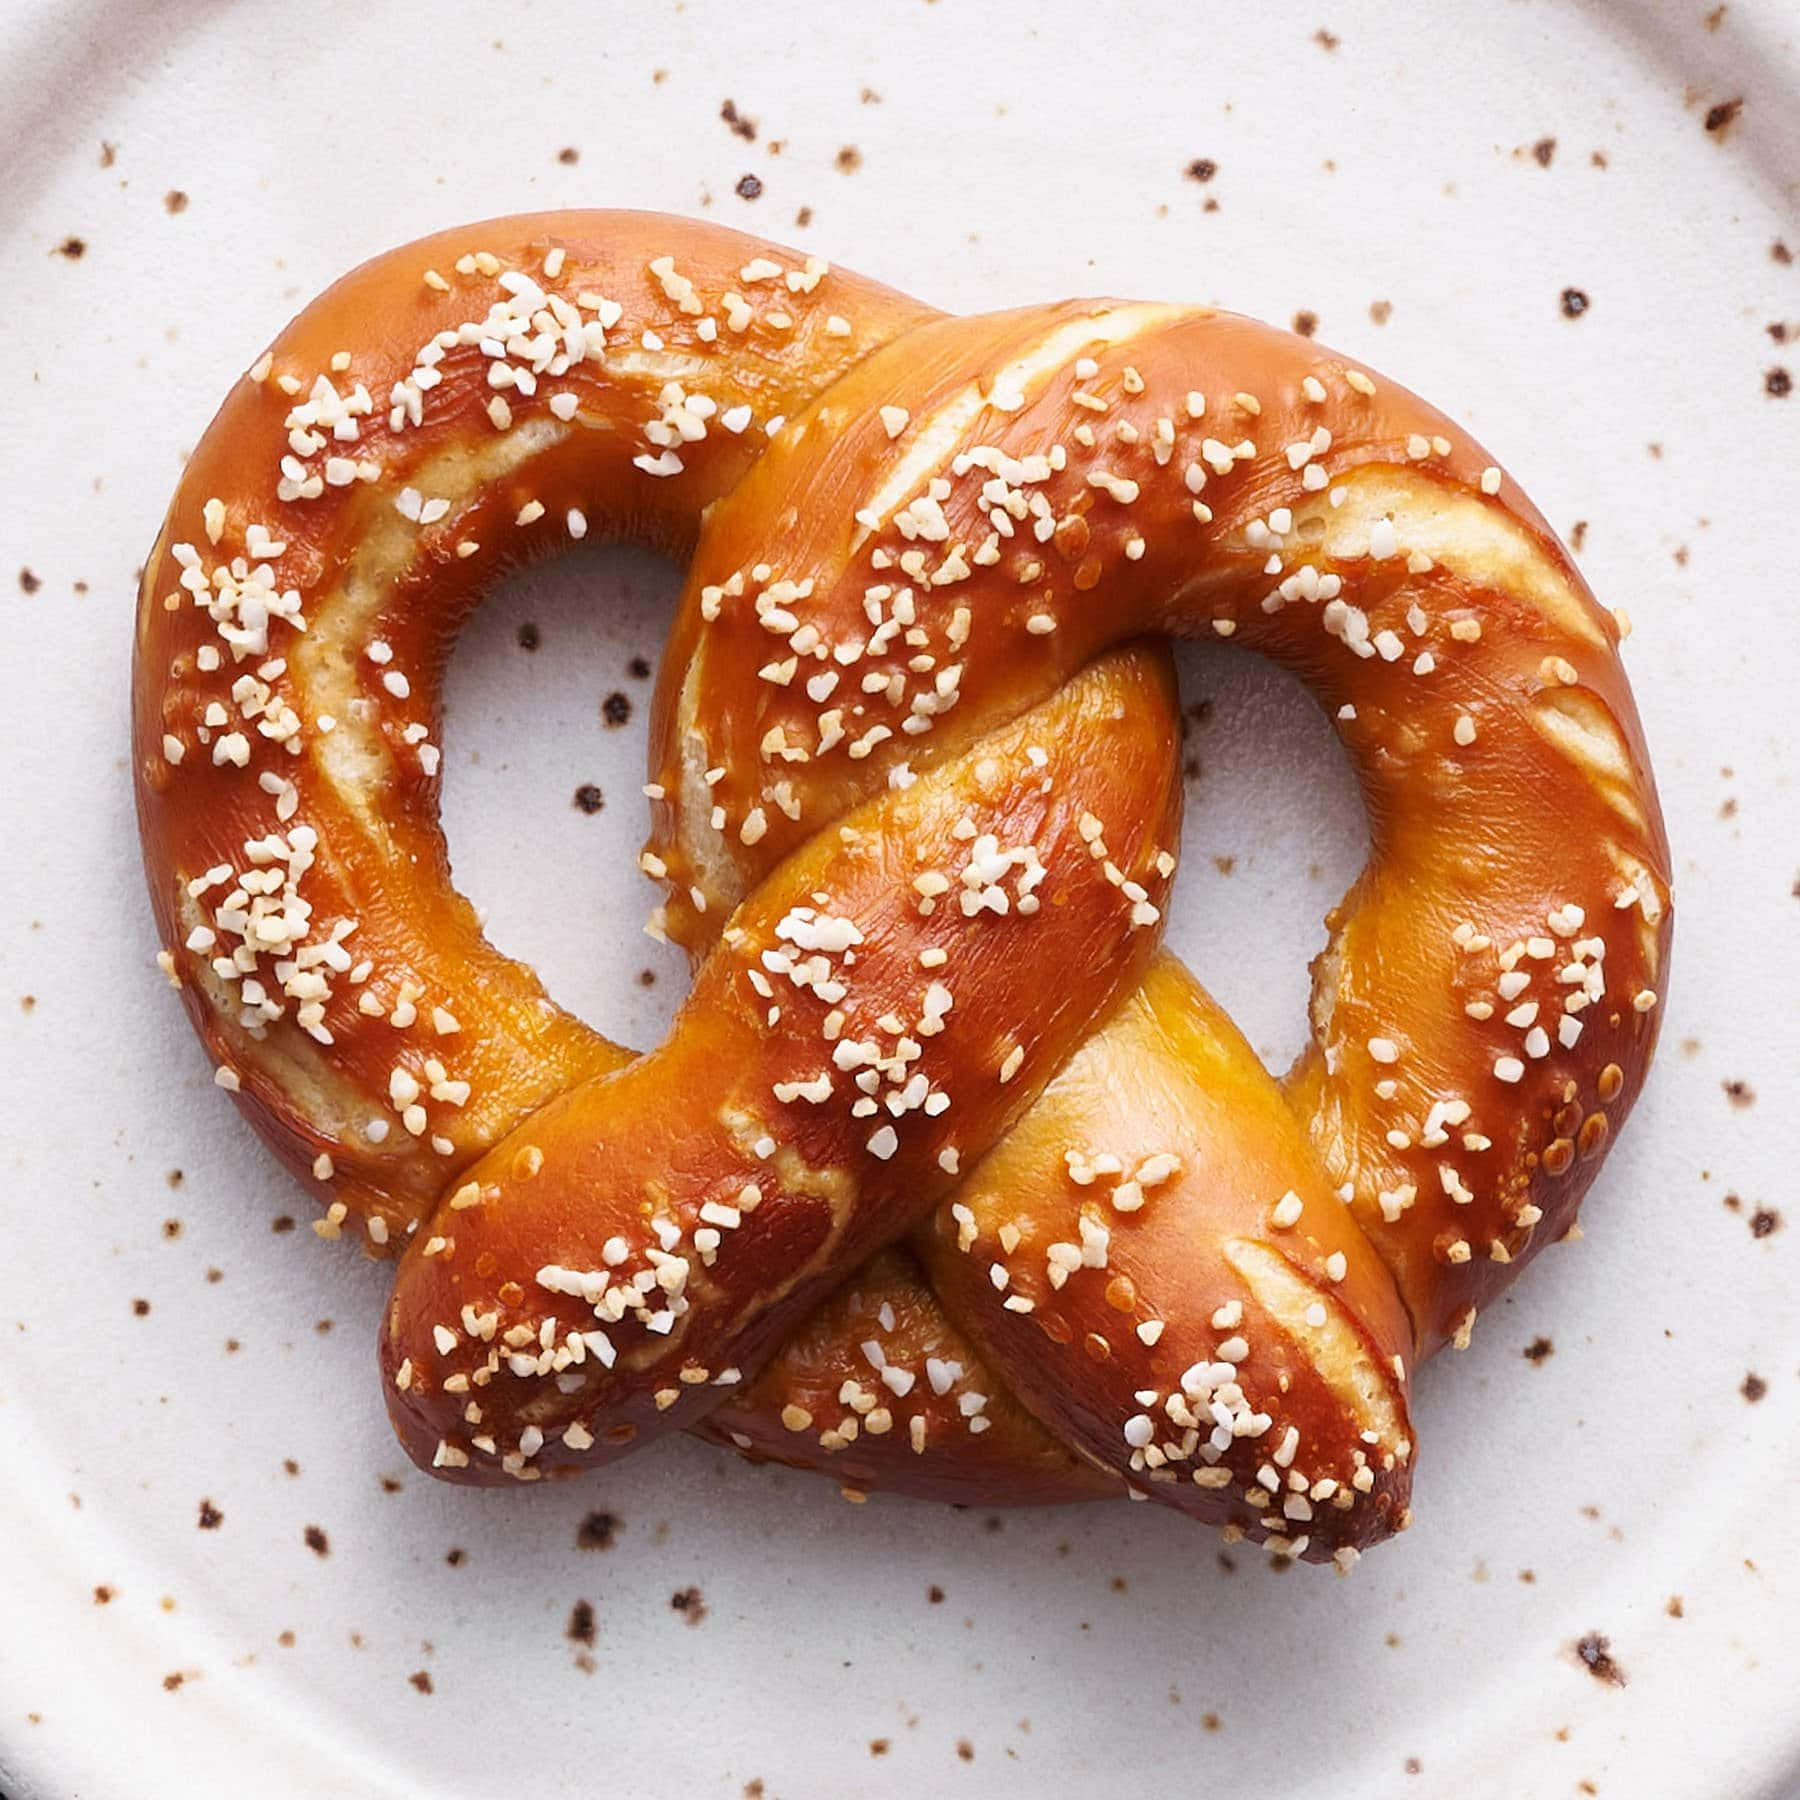 Enjoy the deliciousness of a German-style pretzel